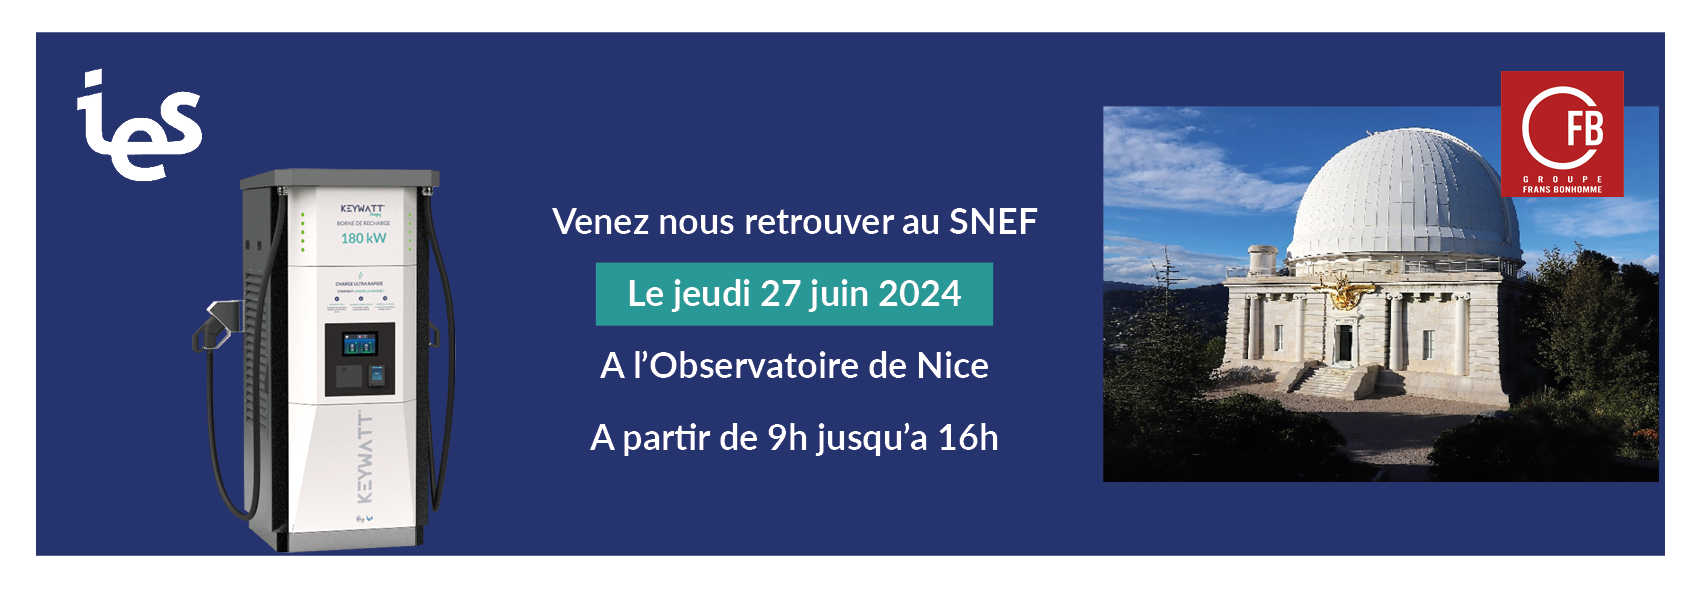 SNEF IES SYNERGY sera présent au Forum SNEF 2024 à Nice ! 